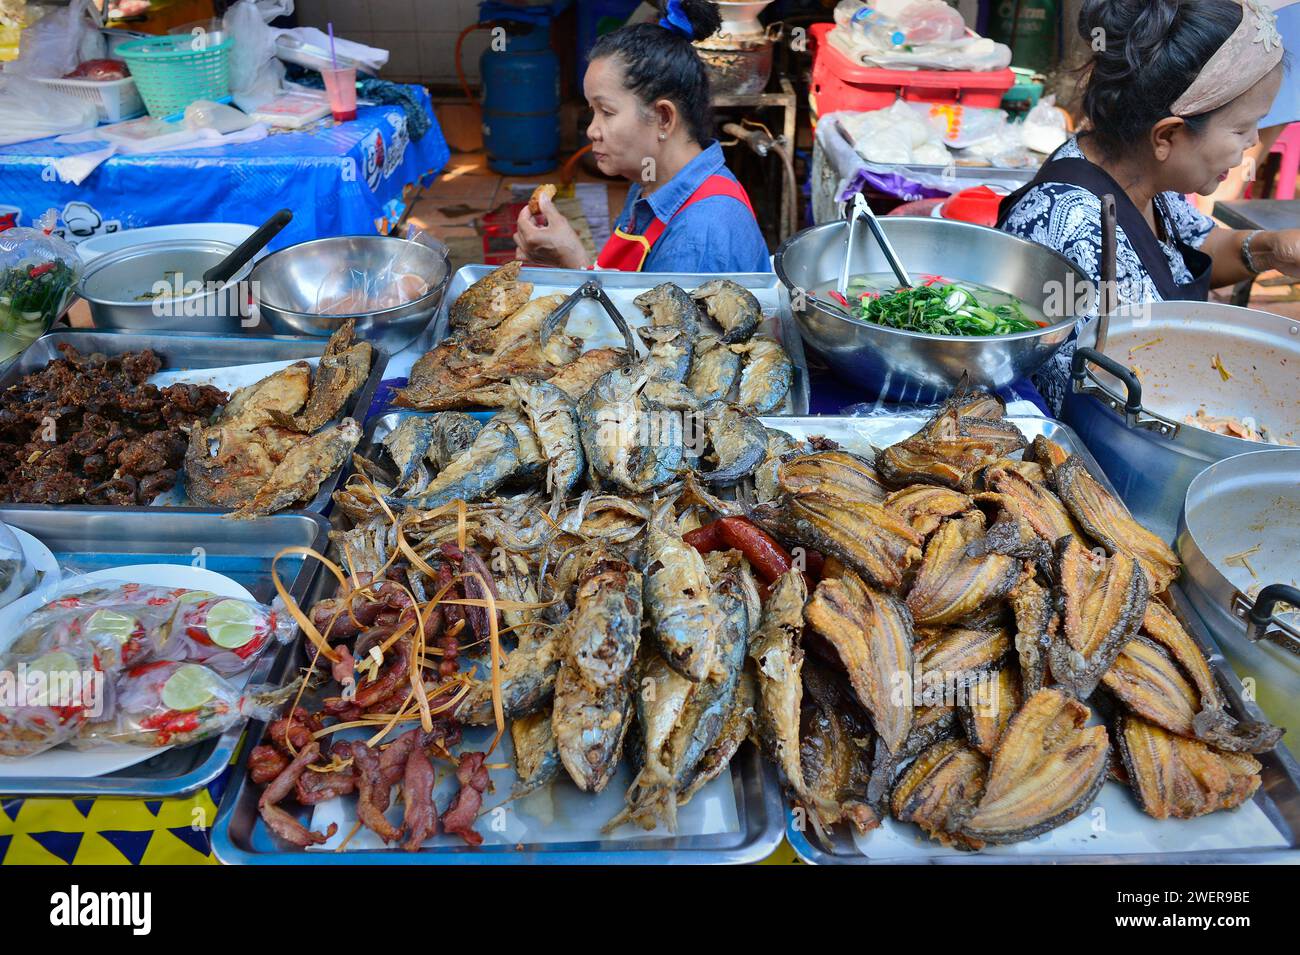 Soi 20 Pradit Silom Road Bangkok Tailandia Foto de stock